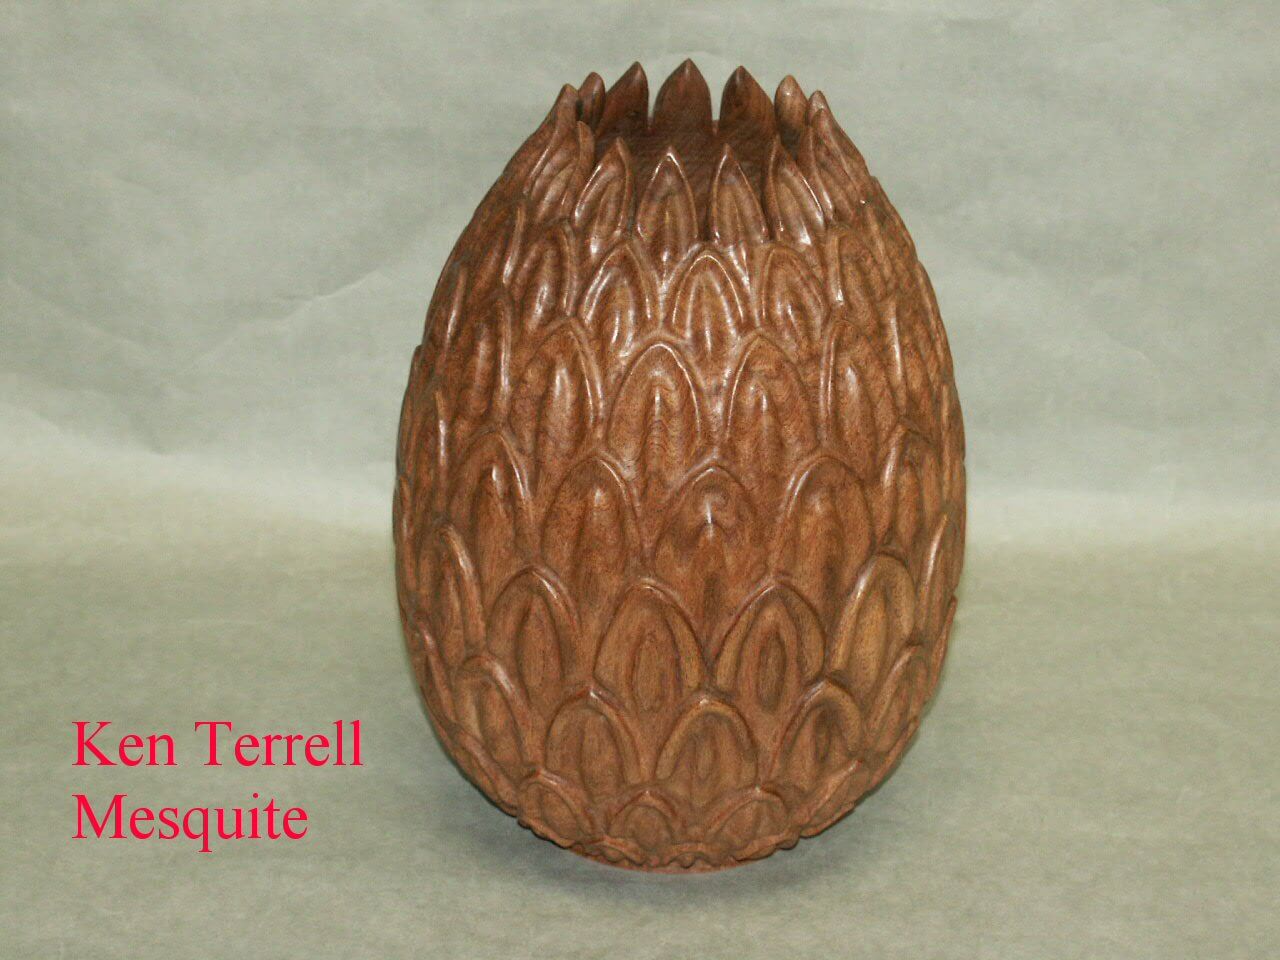 Mesquite pine cone hollow form.